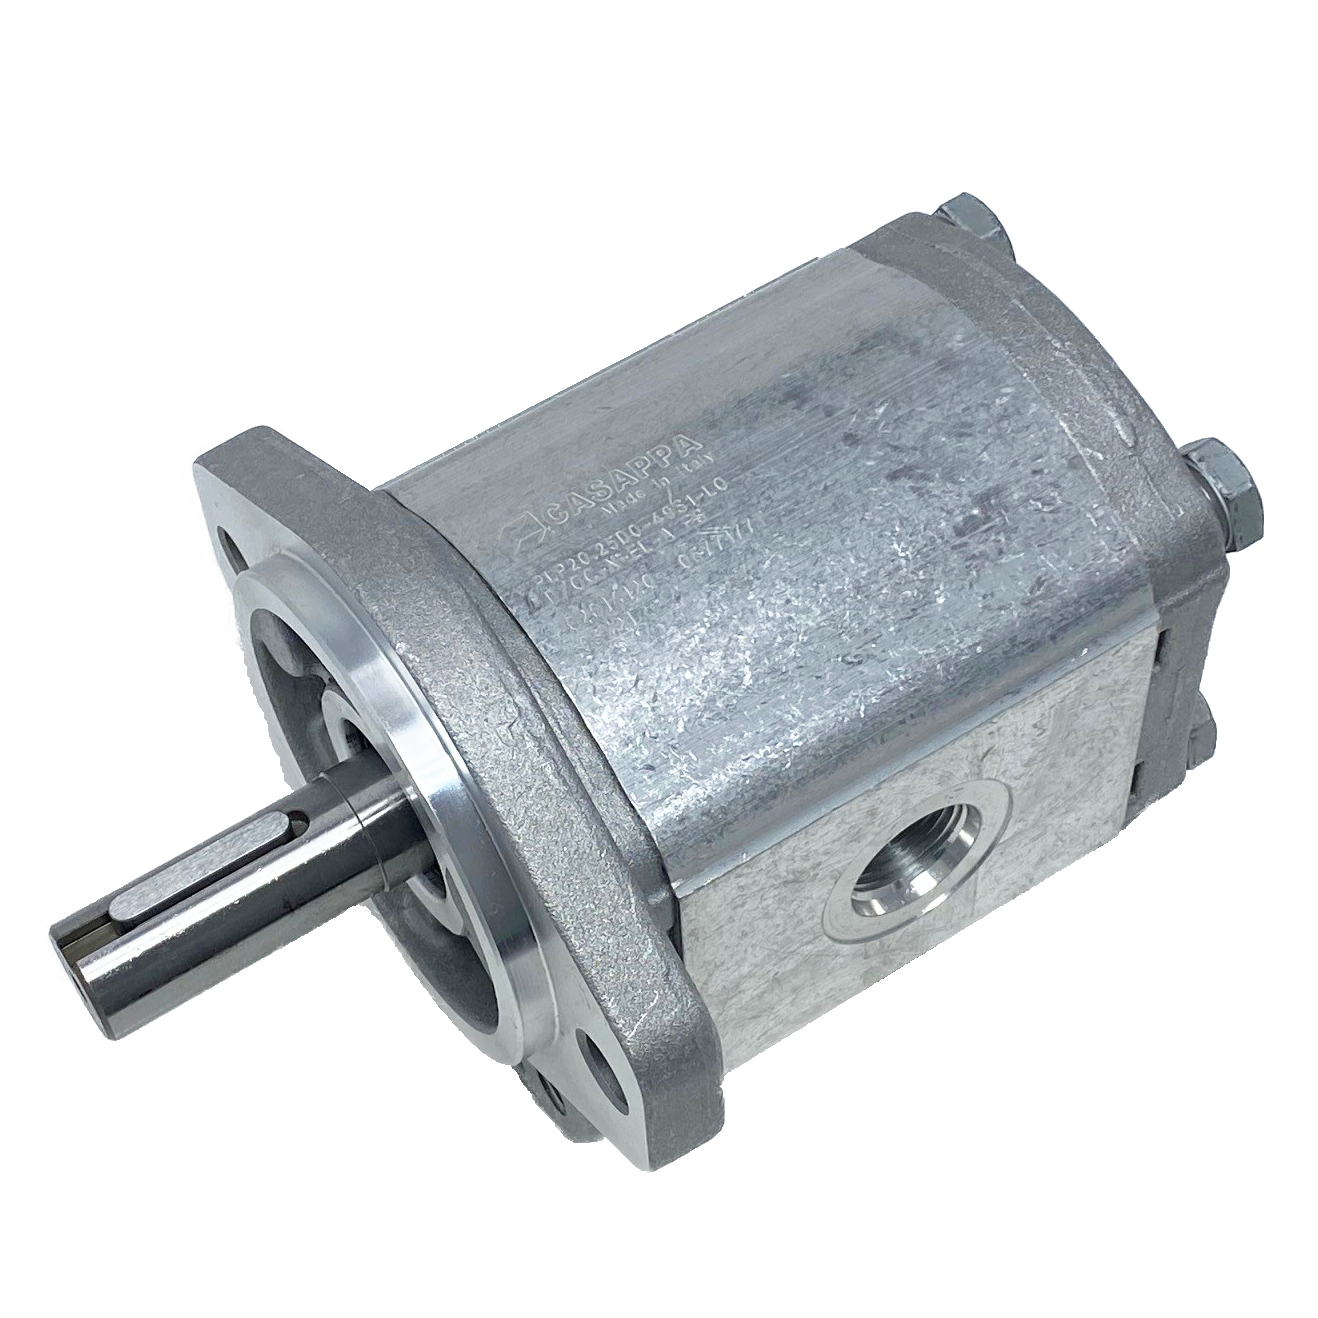 PLM20.31,5B0-49S1-LOC/OD-N-EL : Casappa Polaris Gear Motor, 33.03cc, 1885psi Rated, 2465RPM, Reversible Interior Drain, 3/4" Bore x 3/16" Key Shaft, SAE A 2-Bolt Flange, 0.625 (5/8") #10 SAE Inlet, 0.75 (3/4") #12 SAE Outlet, Aluminum Body & Flange